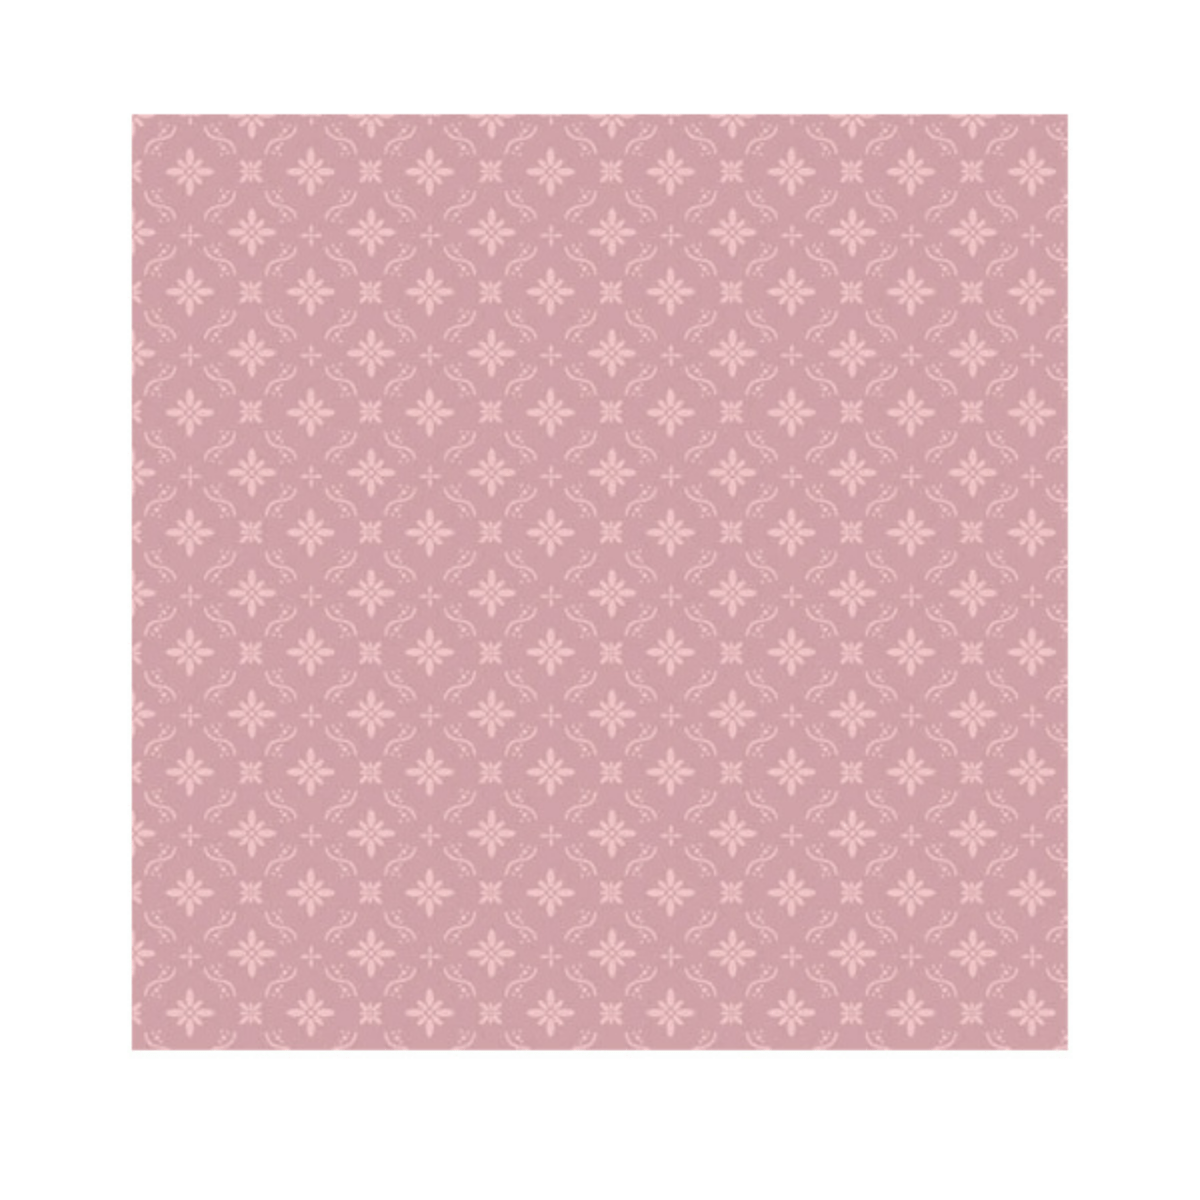 Servietter- Damask mønster Dusty rosa